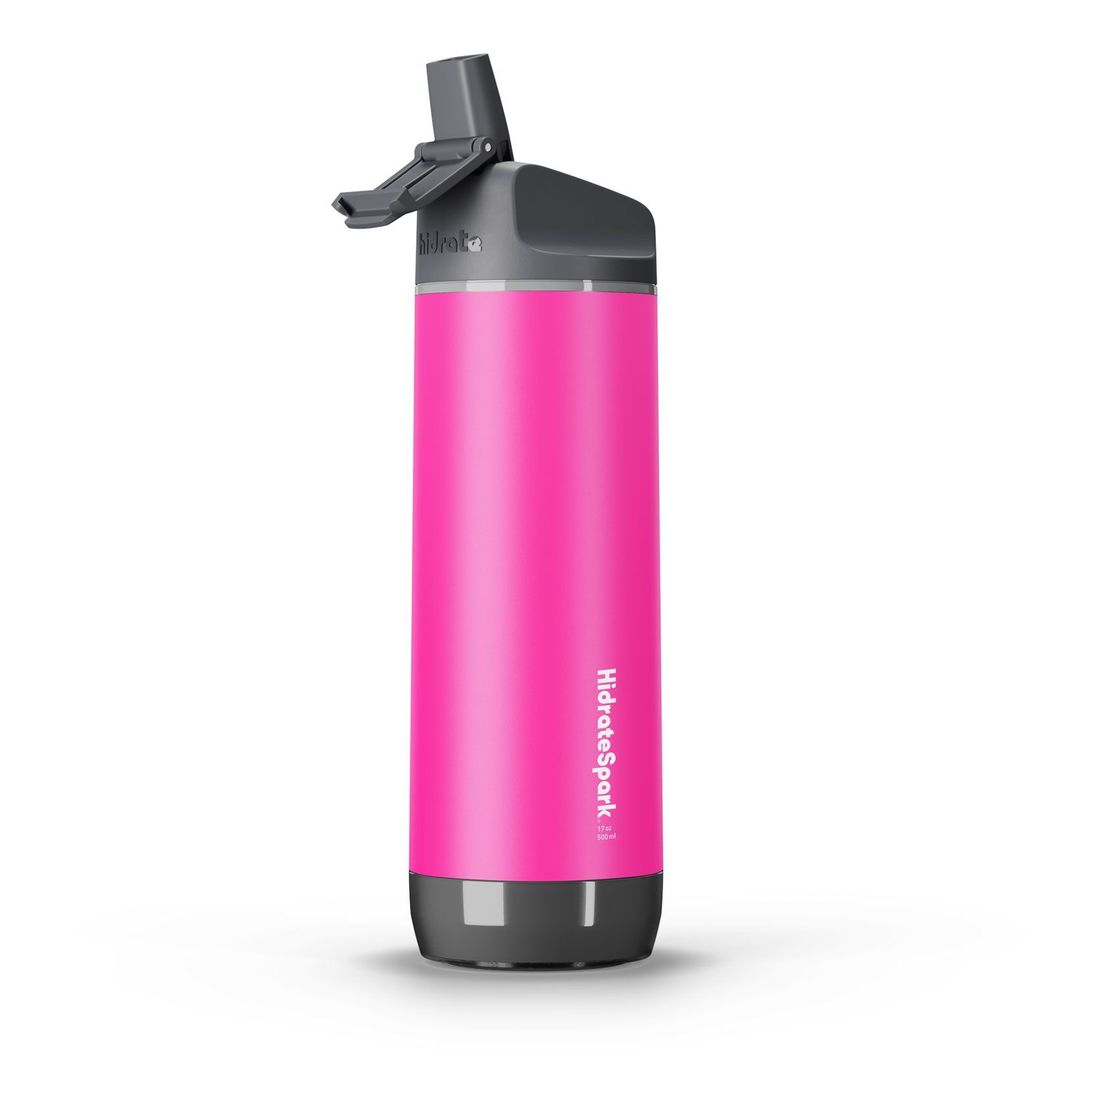 Hidratespark Smart Water Bottle with Straw Lid 500 ml - Fruit Punch